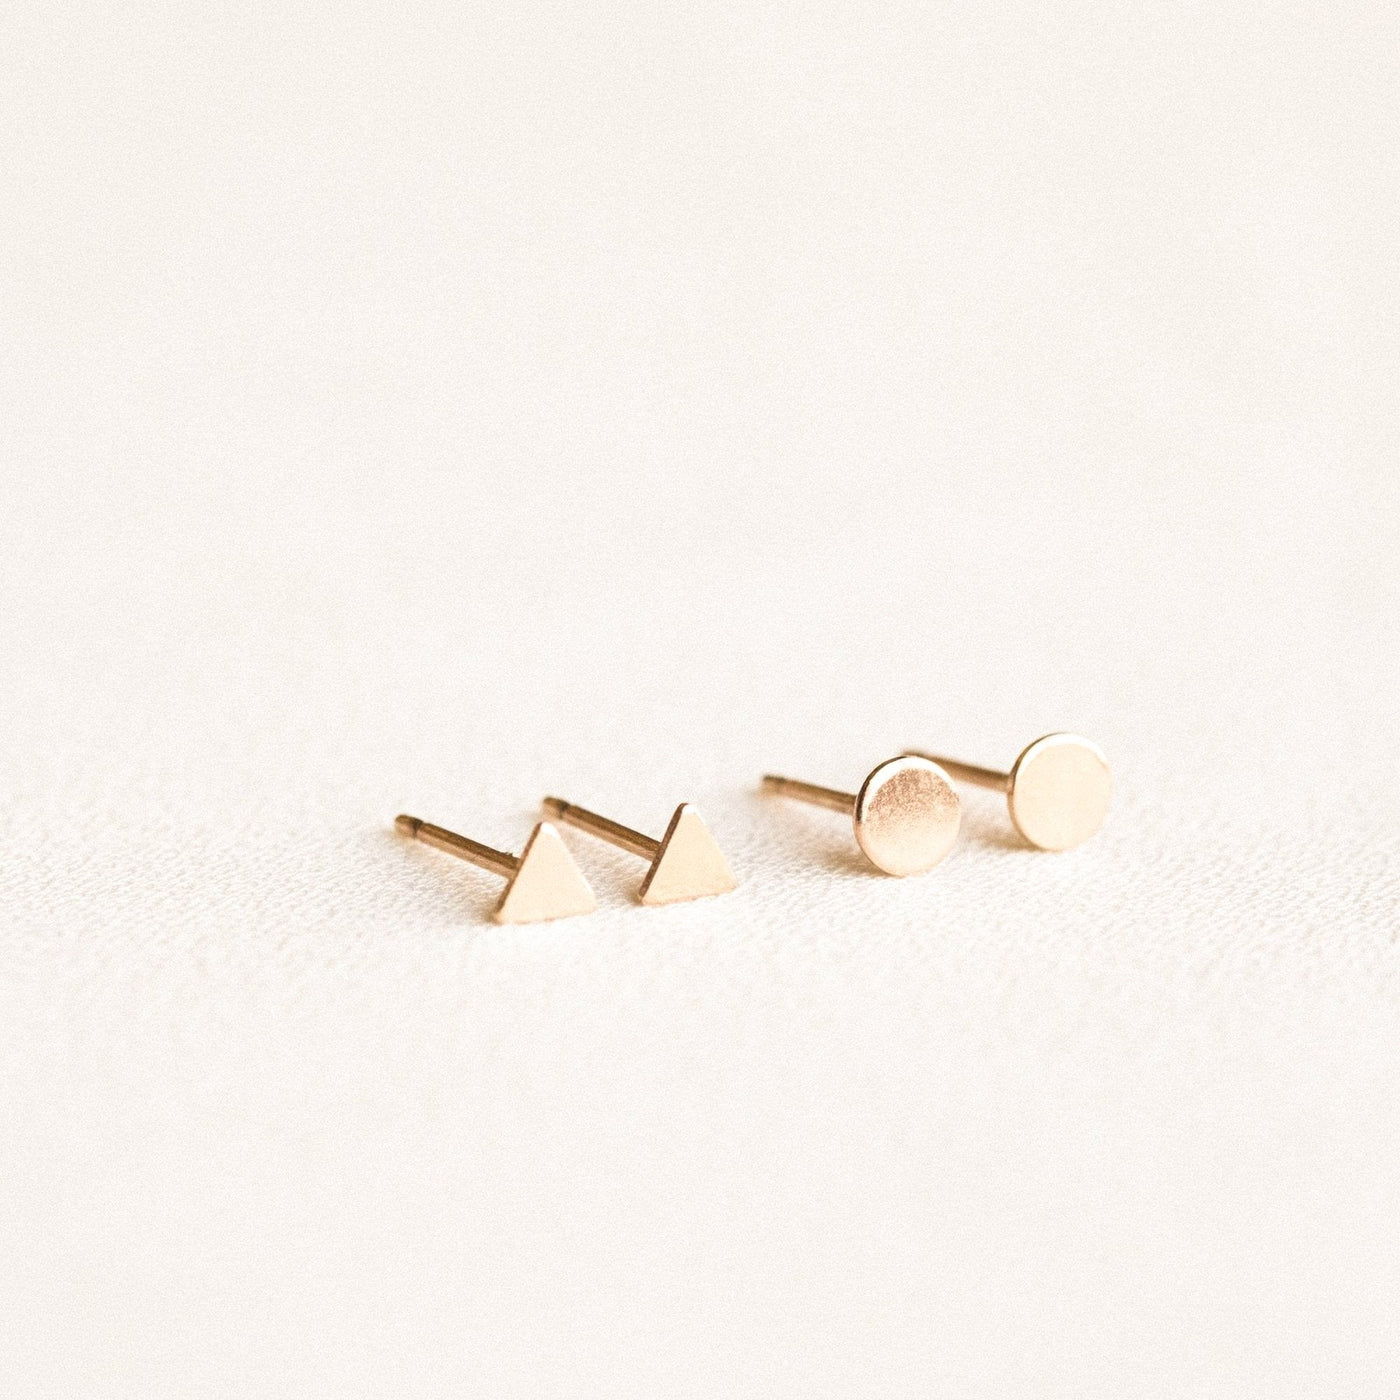 Circle Stud Earrings by Simple & Dainty Jewelry